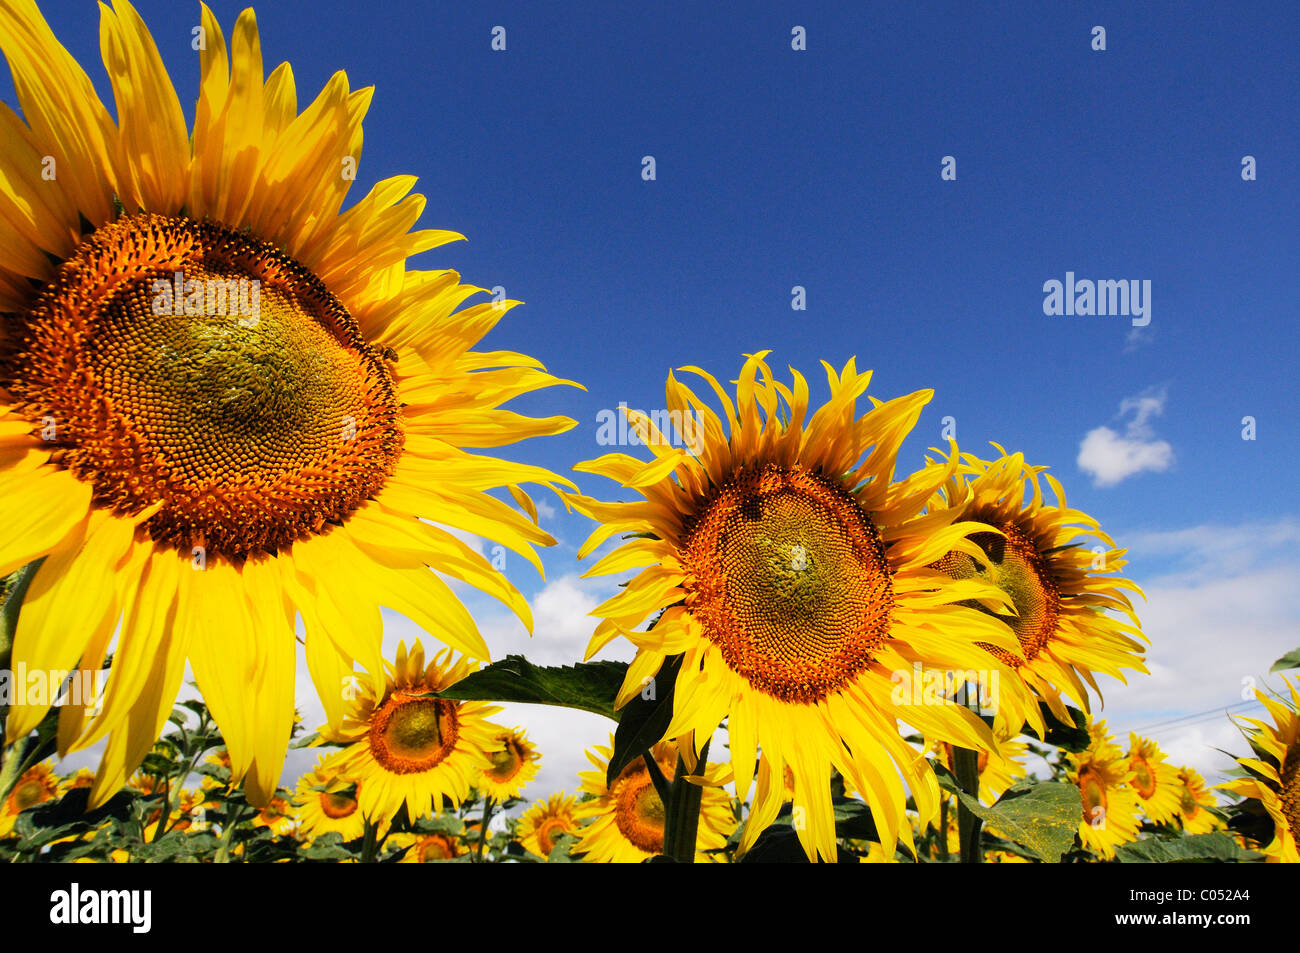 Sunflowers against a clear blue sky Stock Photo